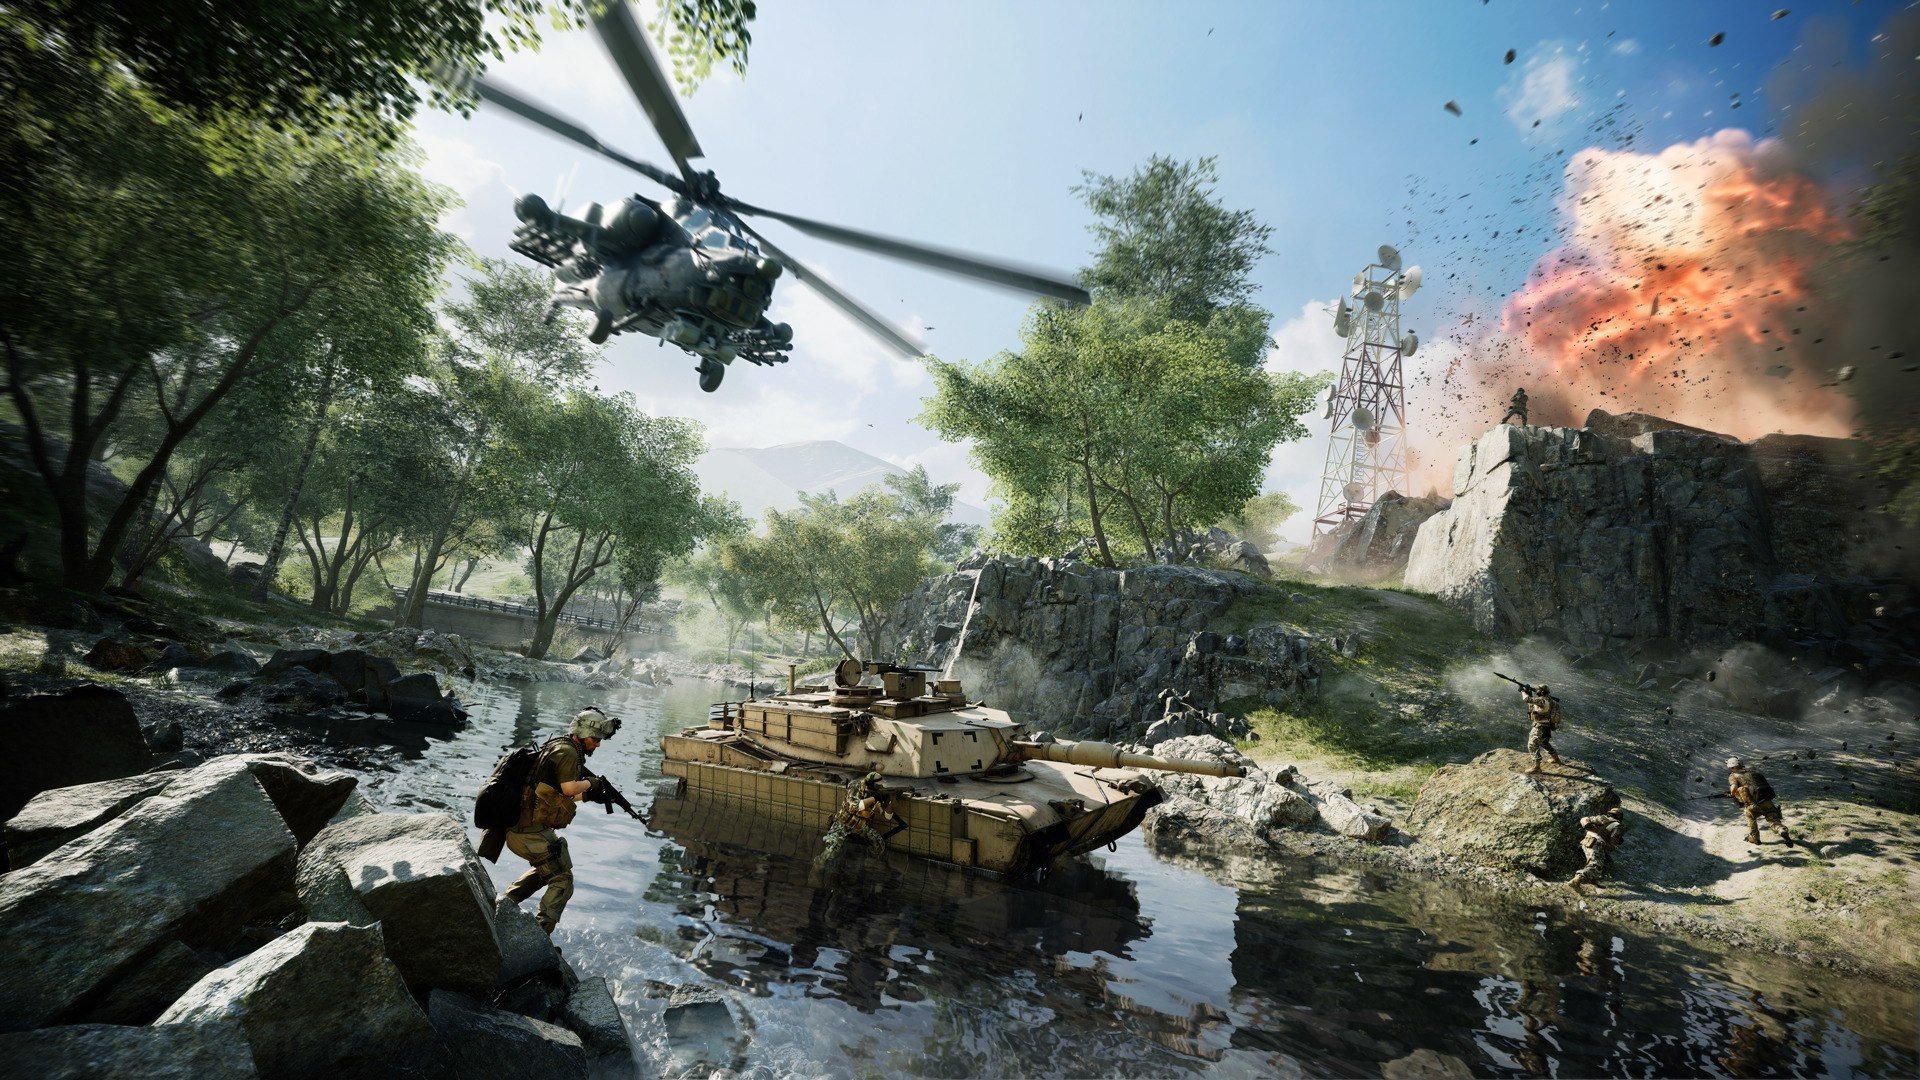 Скриншот Battlefield 2042 Ultimate Edition + Подарки